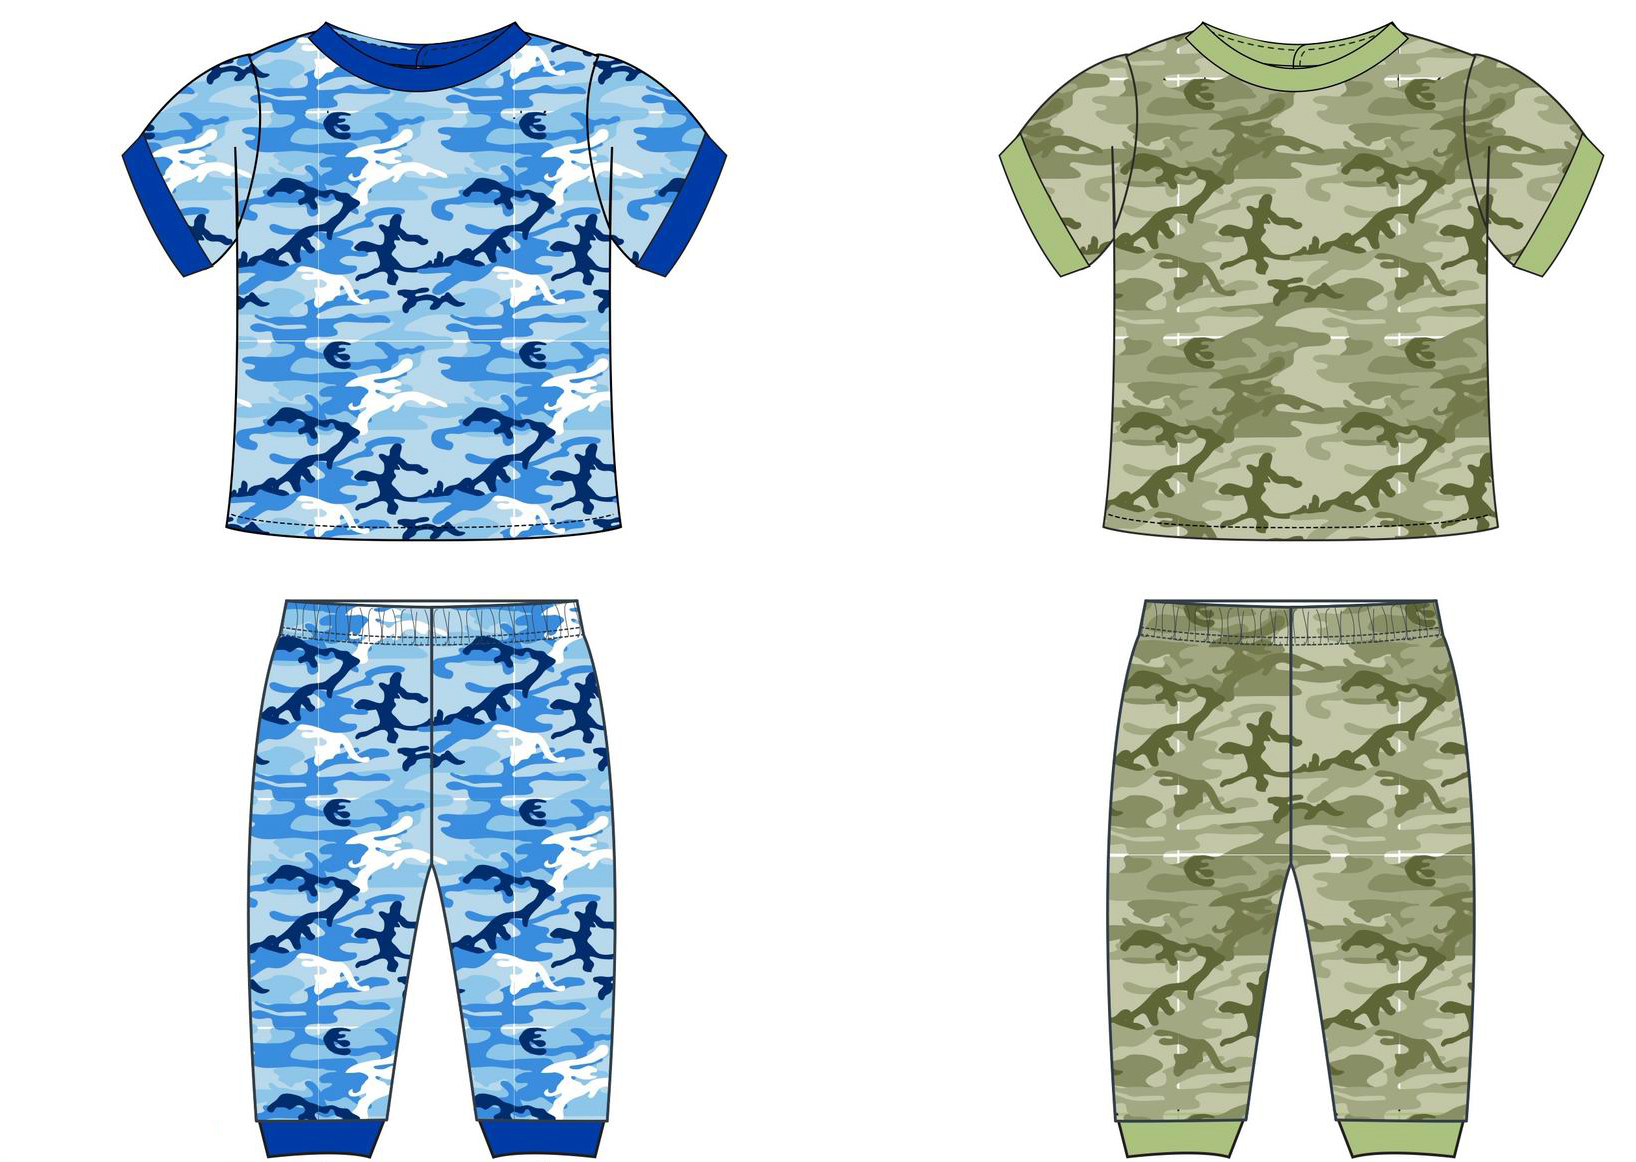 Boy's 2 PC. Rib Pajama Sets w/ Short-Sleeve SHIRT & Pull-On Pants - Camo Print - Ages 6-10